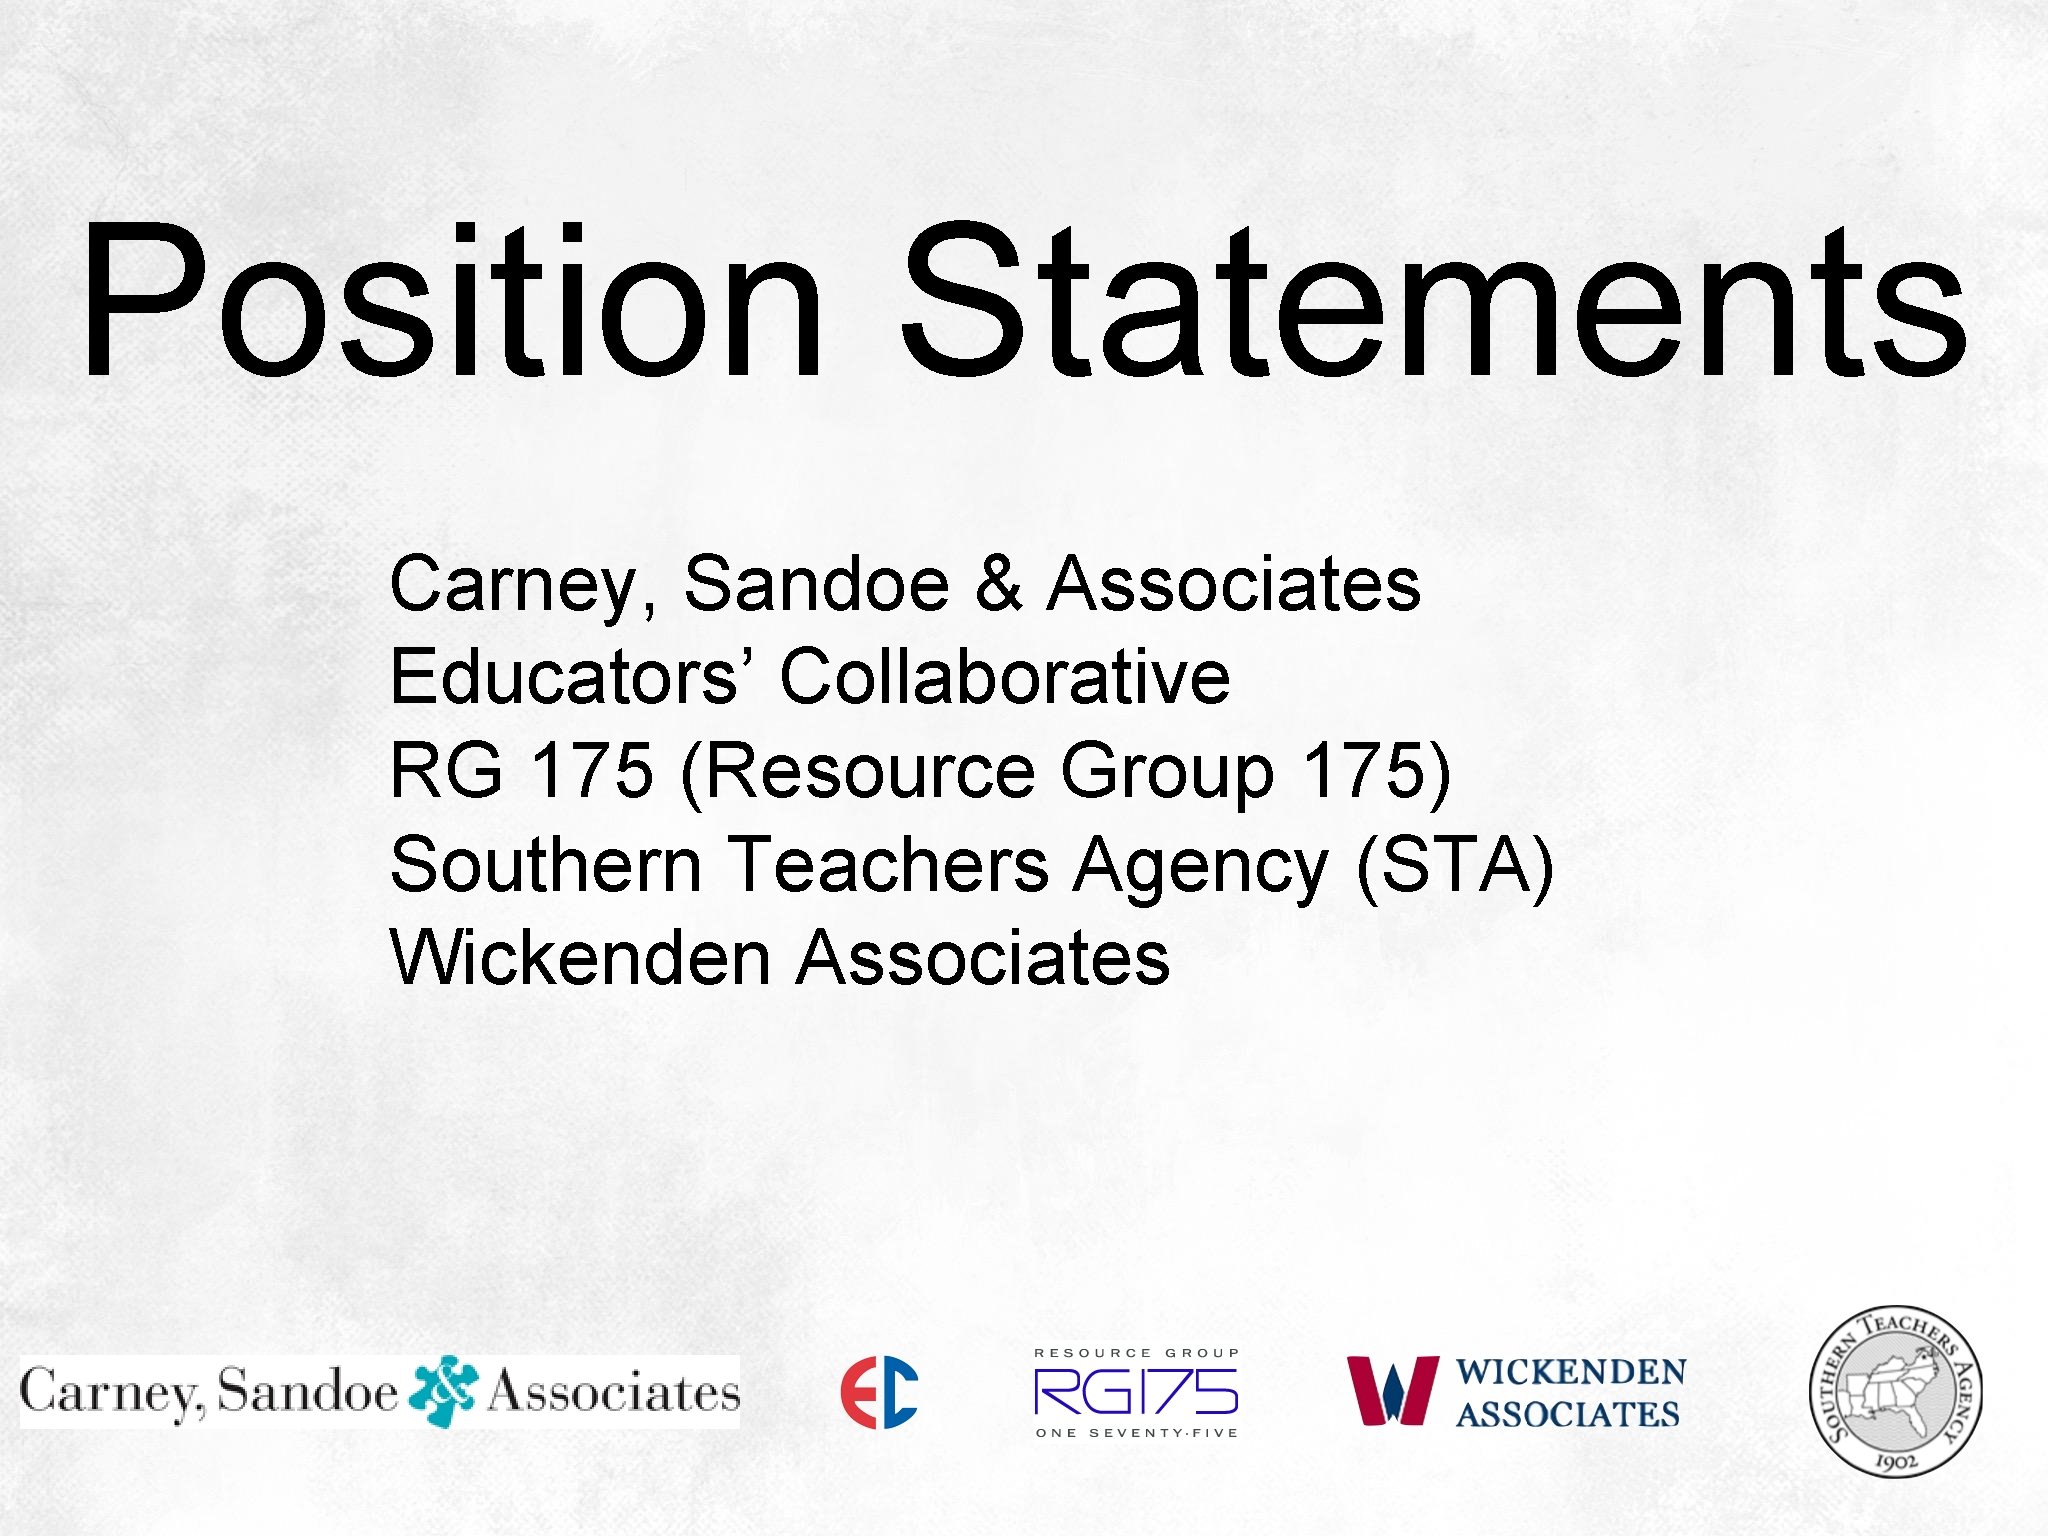 Position Statements Carney, Sandoe & Associates Educators’ Collaborative RG 175 (Resource Group 175) Southern